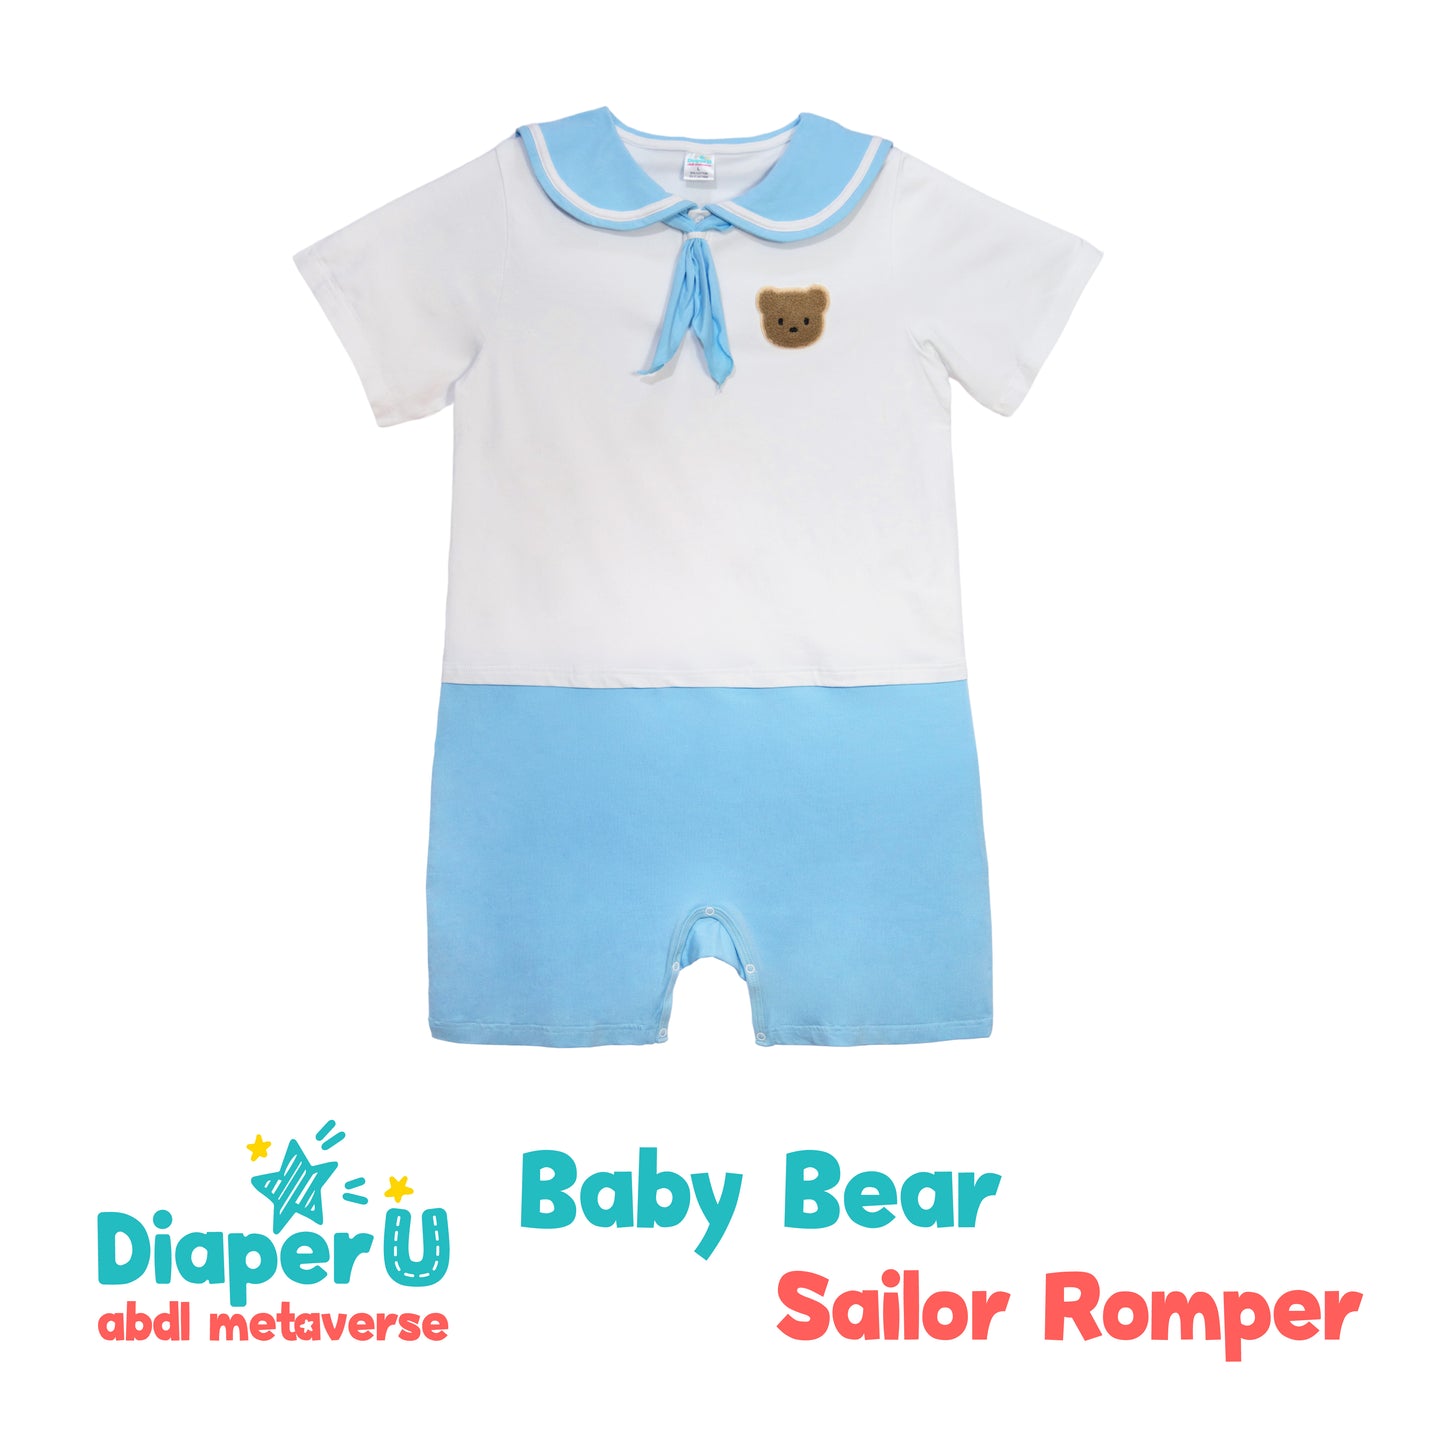 Baby Bear Sailor Romper